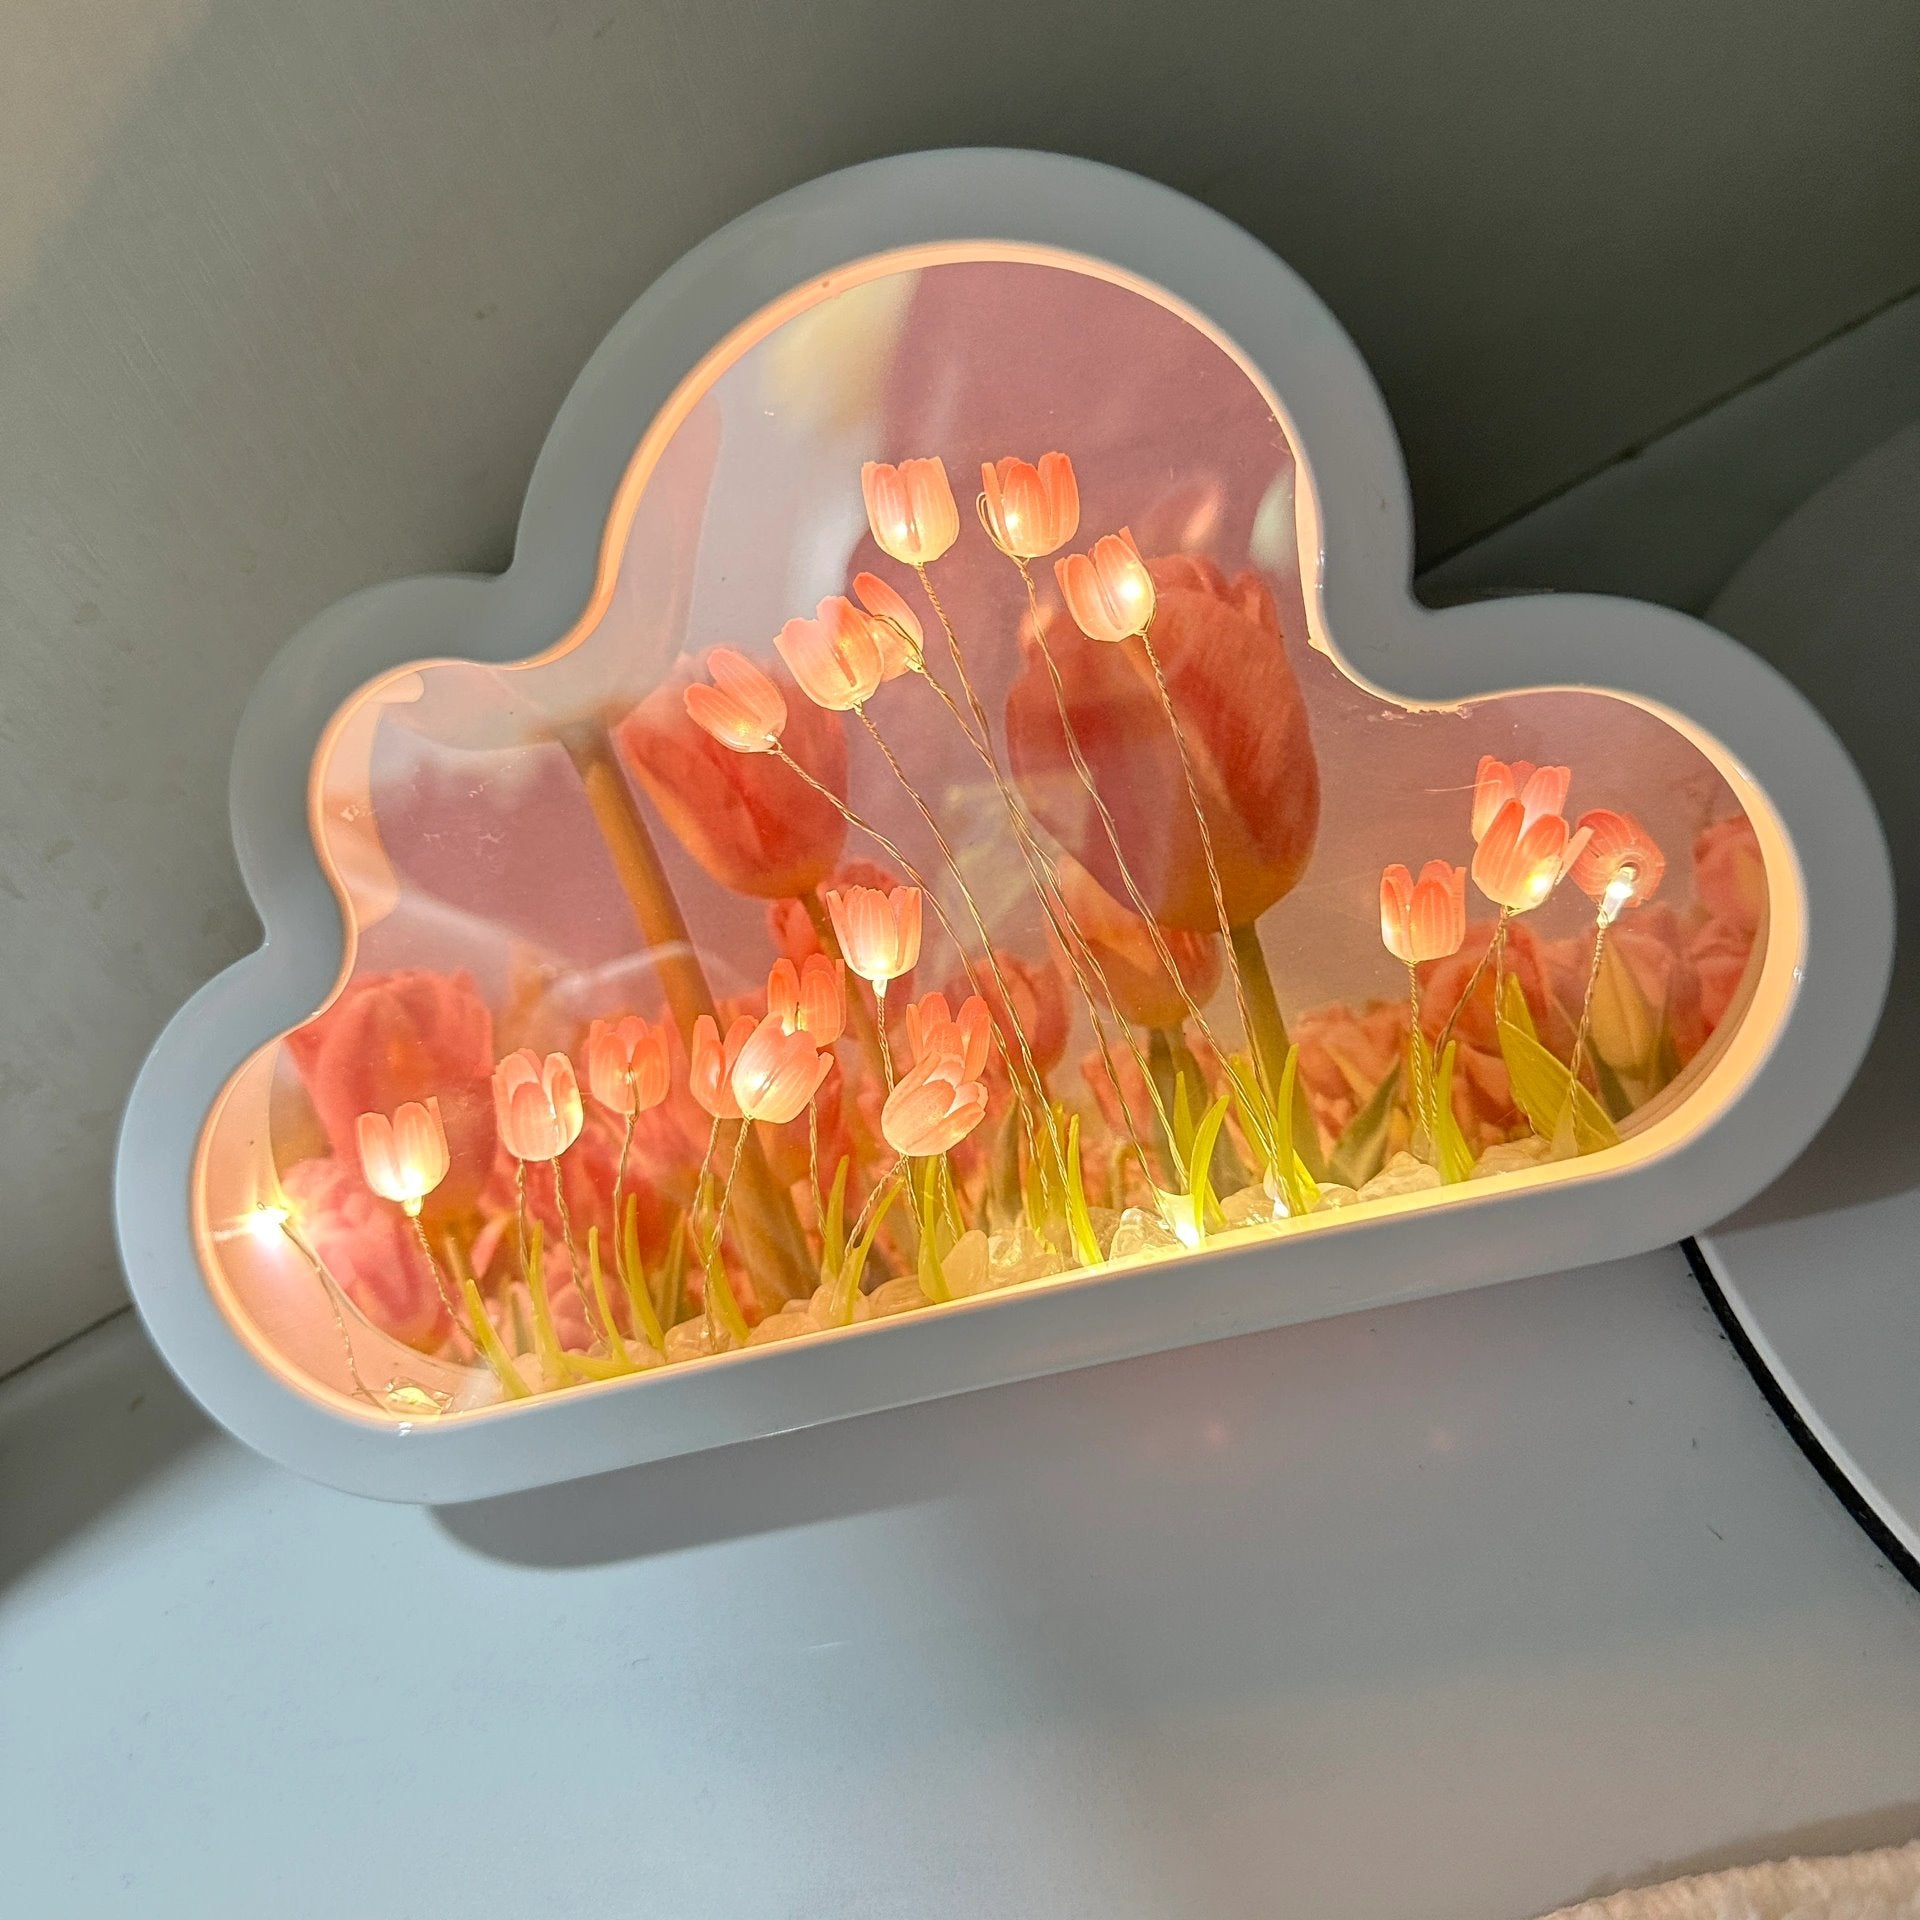 TulLight – DIY Tulip Cloud Light With Three-Dimensional Effect